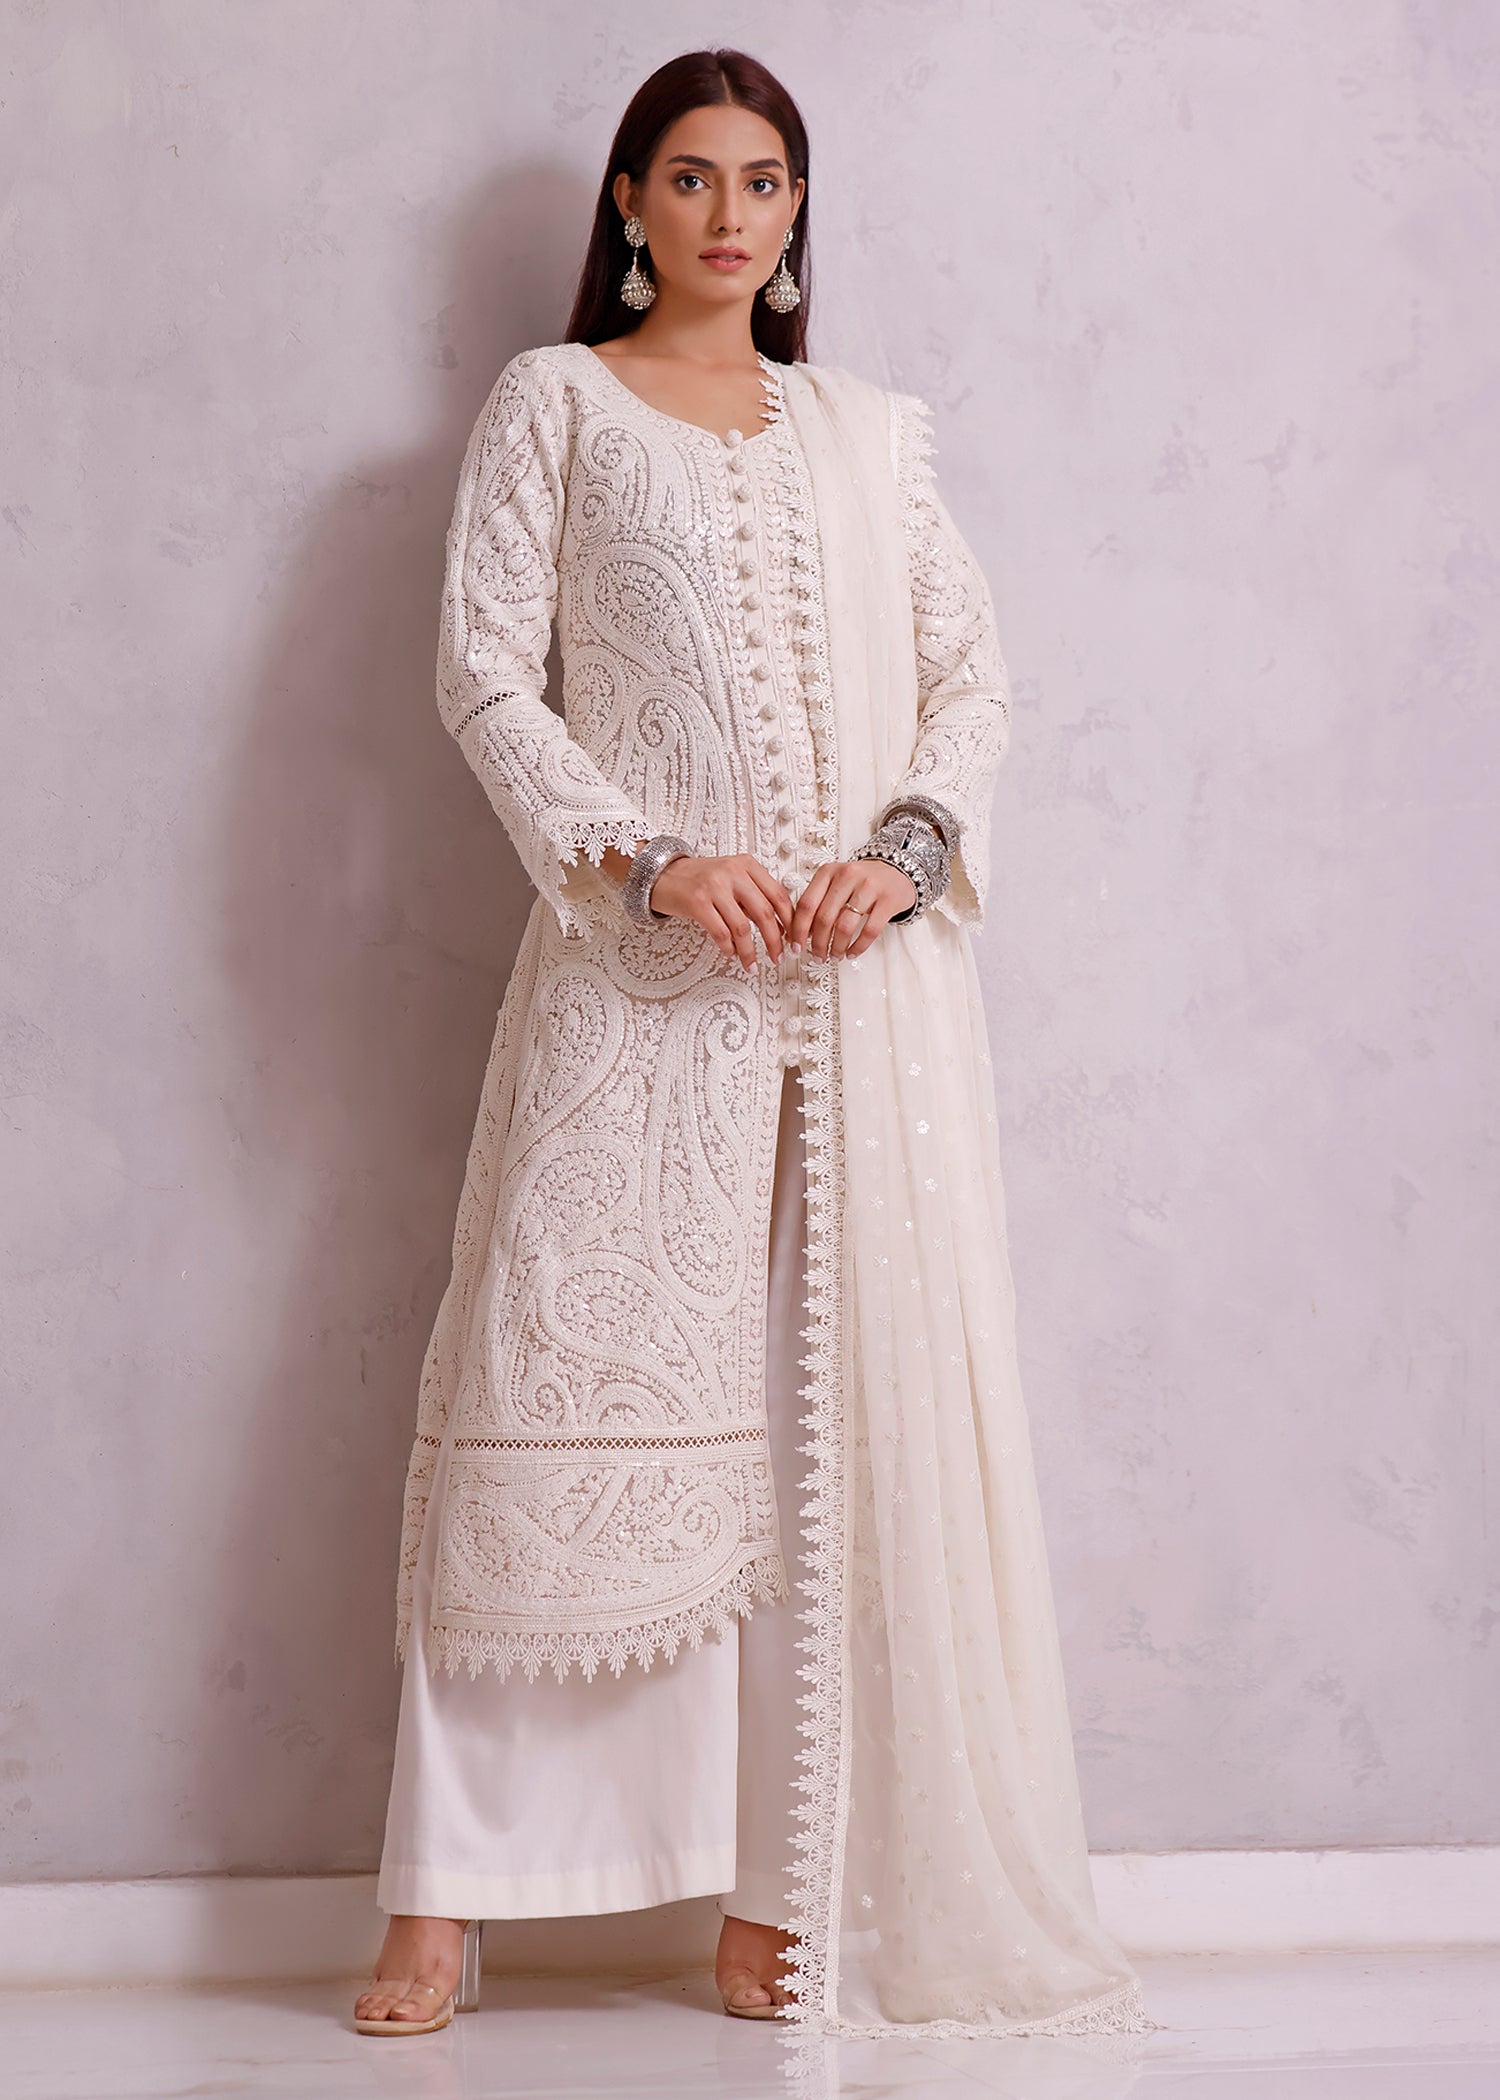 WHITE Indian Paisley Coat with Sequins Rizwan Beyg Luxury pret wedding wear paksitani wedding wear  